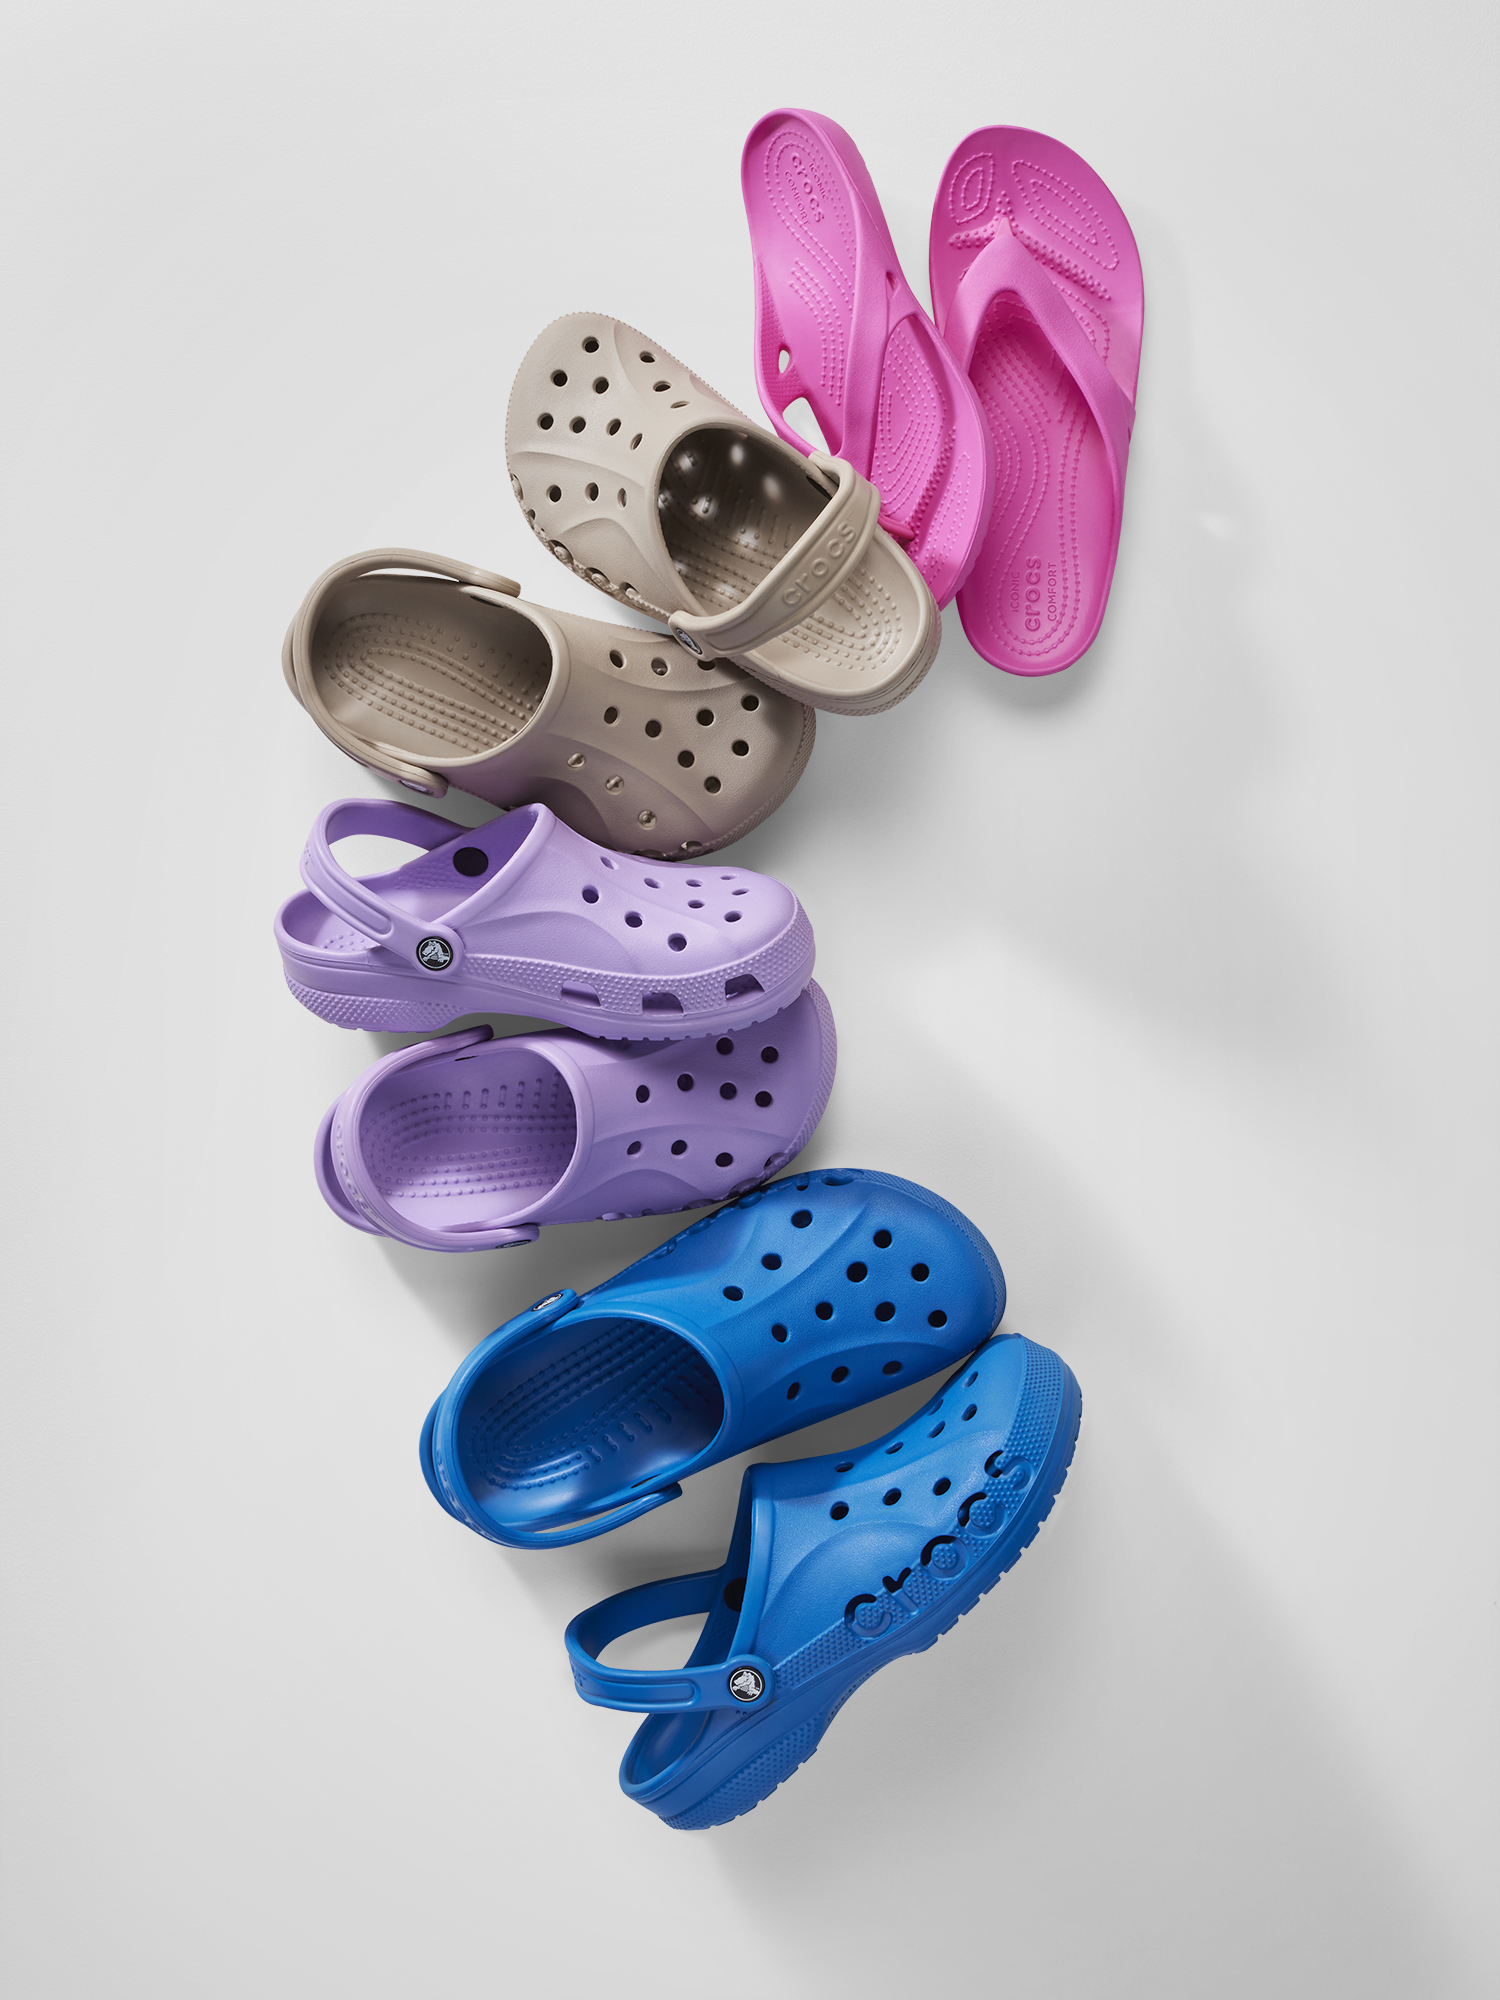 Crocs Men's and Women's Unisex Baya Clog Sandals - image 2 of 5